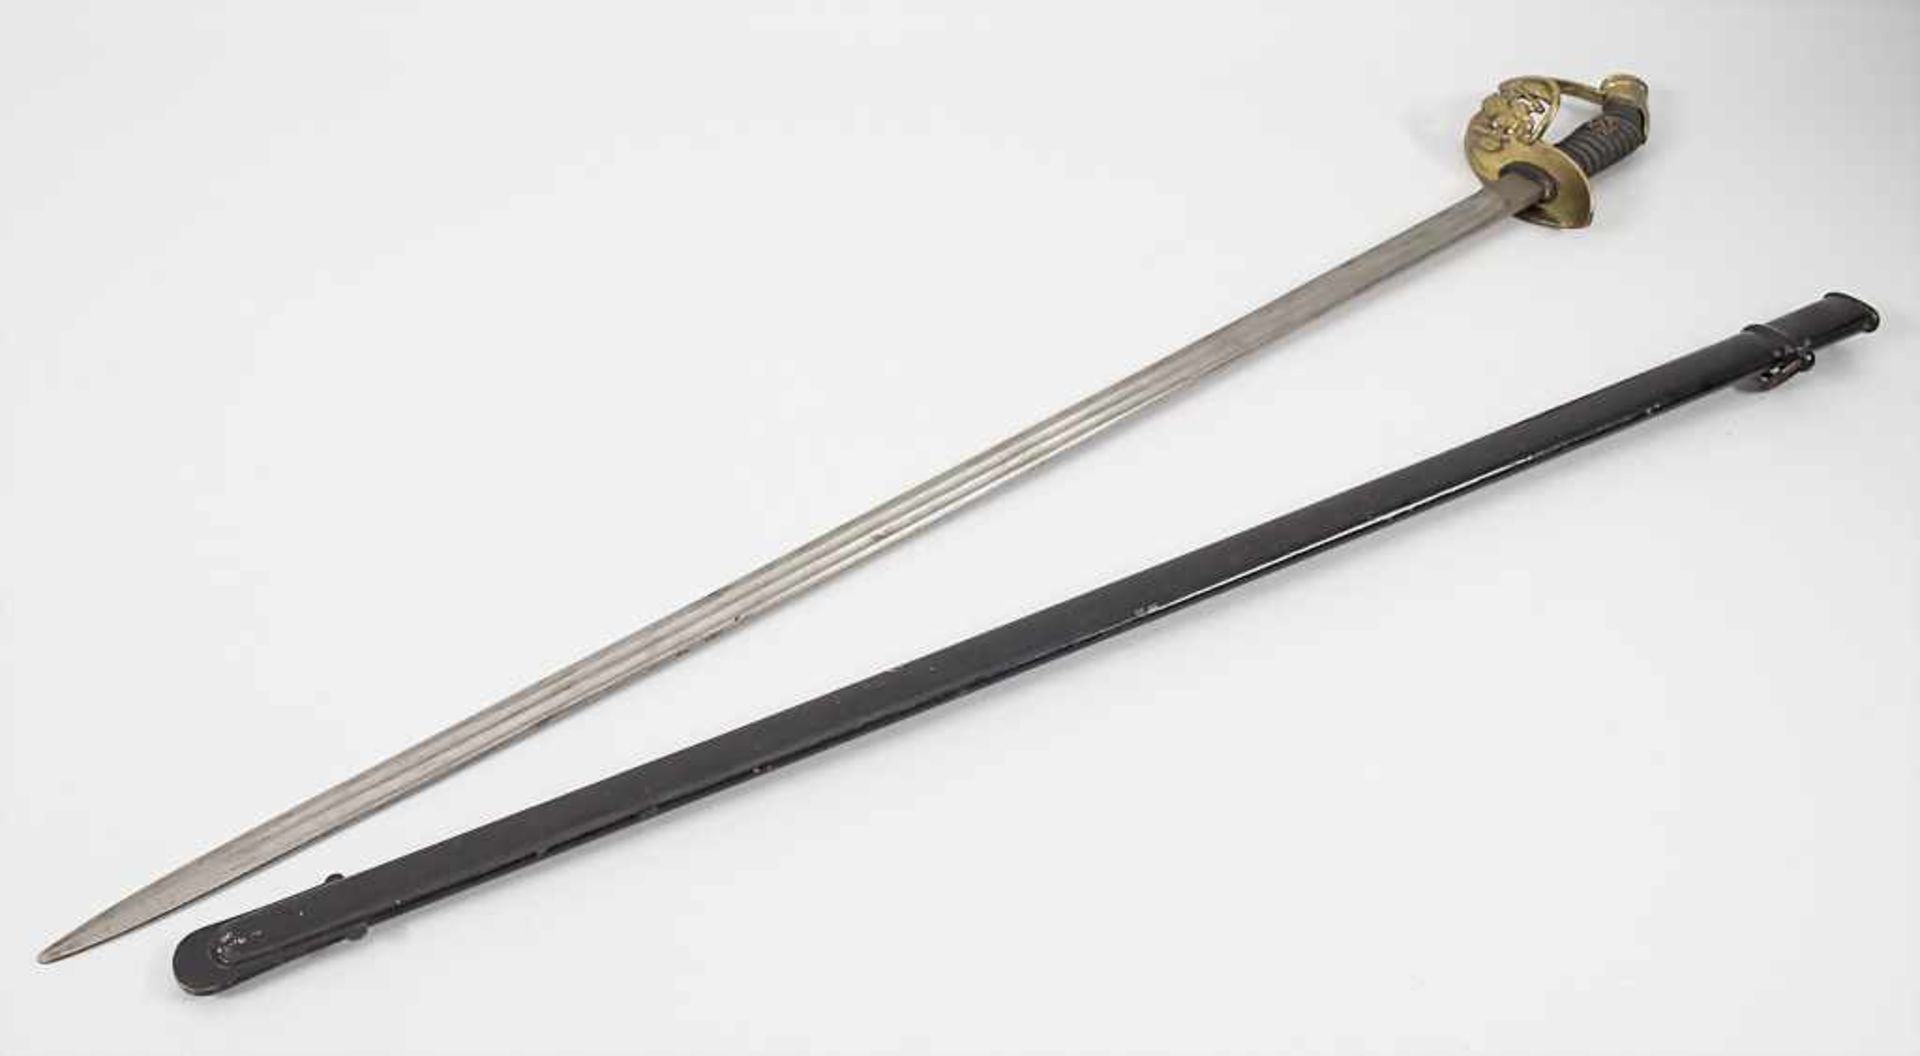 Infanterie Offiziersdegen / A infantry officer's sword, Preußen, Modell 1889 - Image 4 of 7